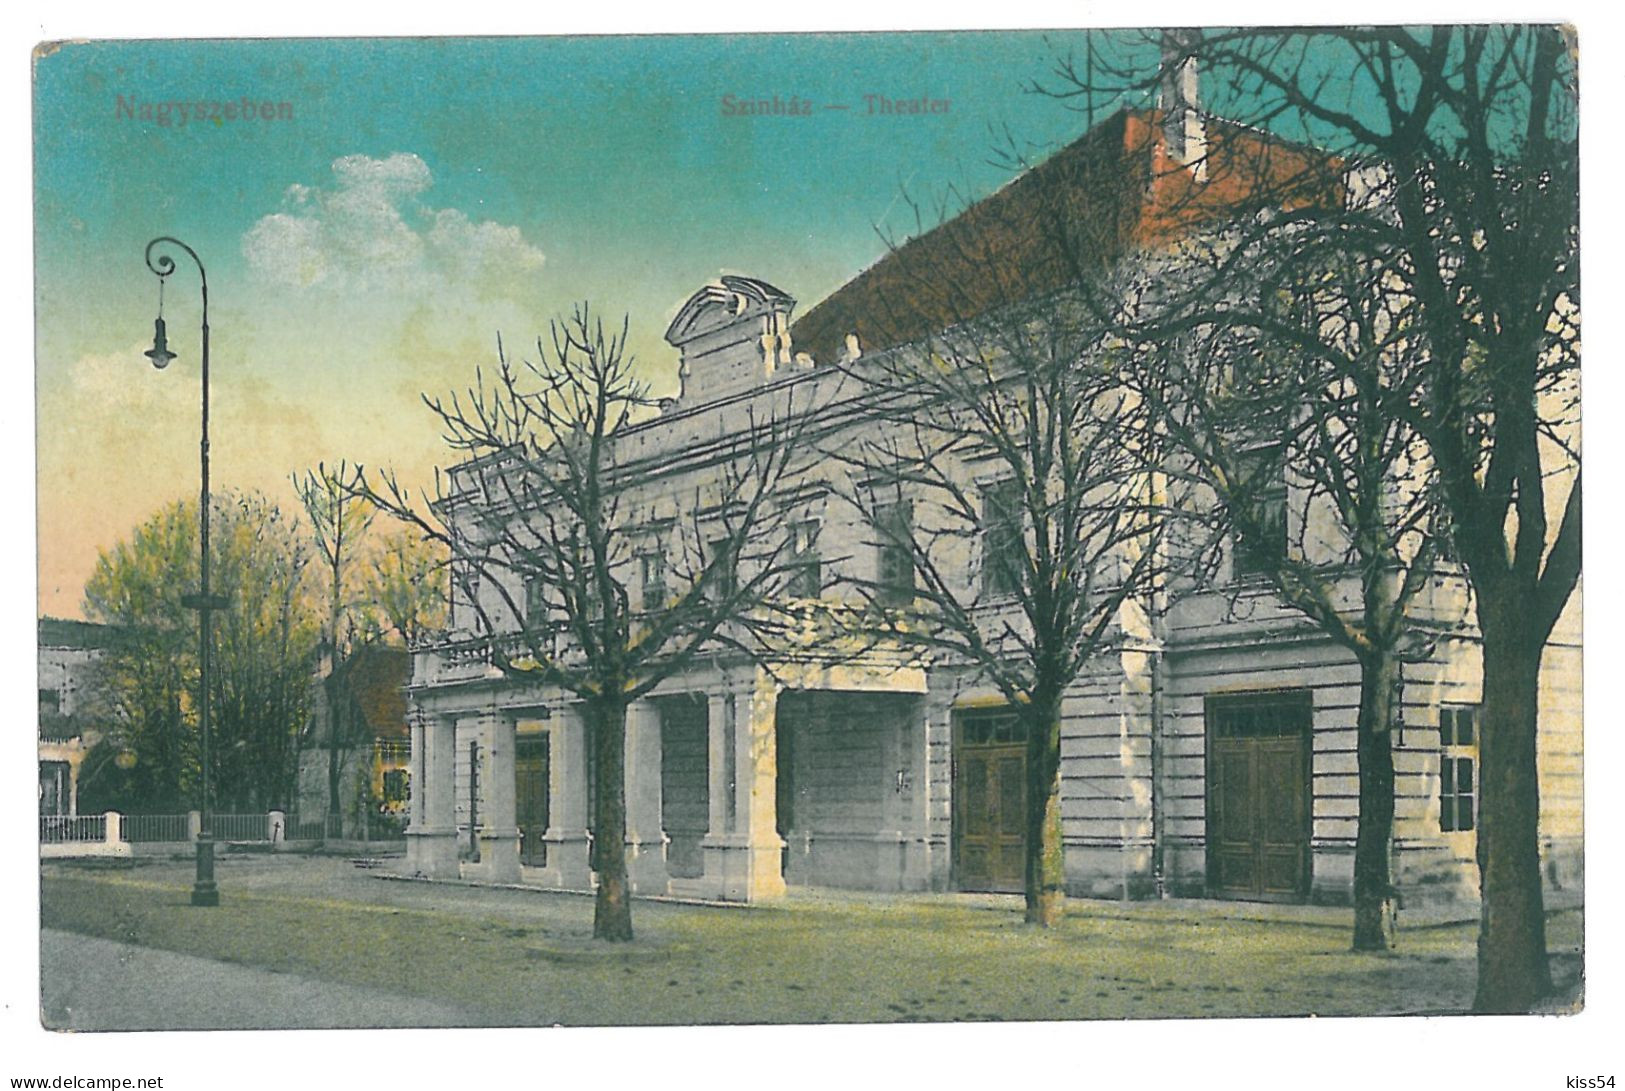 RO 91 - 13448 SIBIU, Theatre, Romania - Old Postcard - Unused - Roumanie